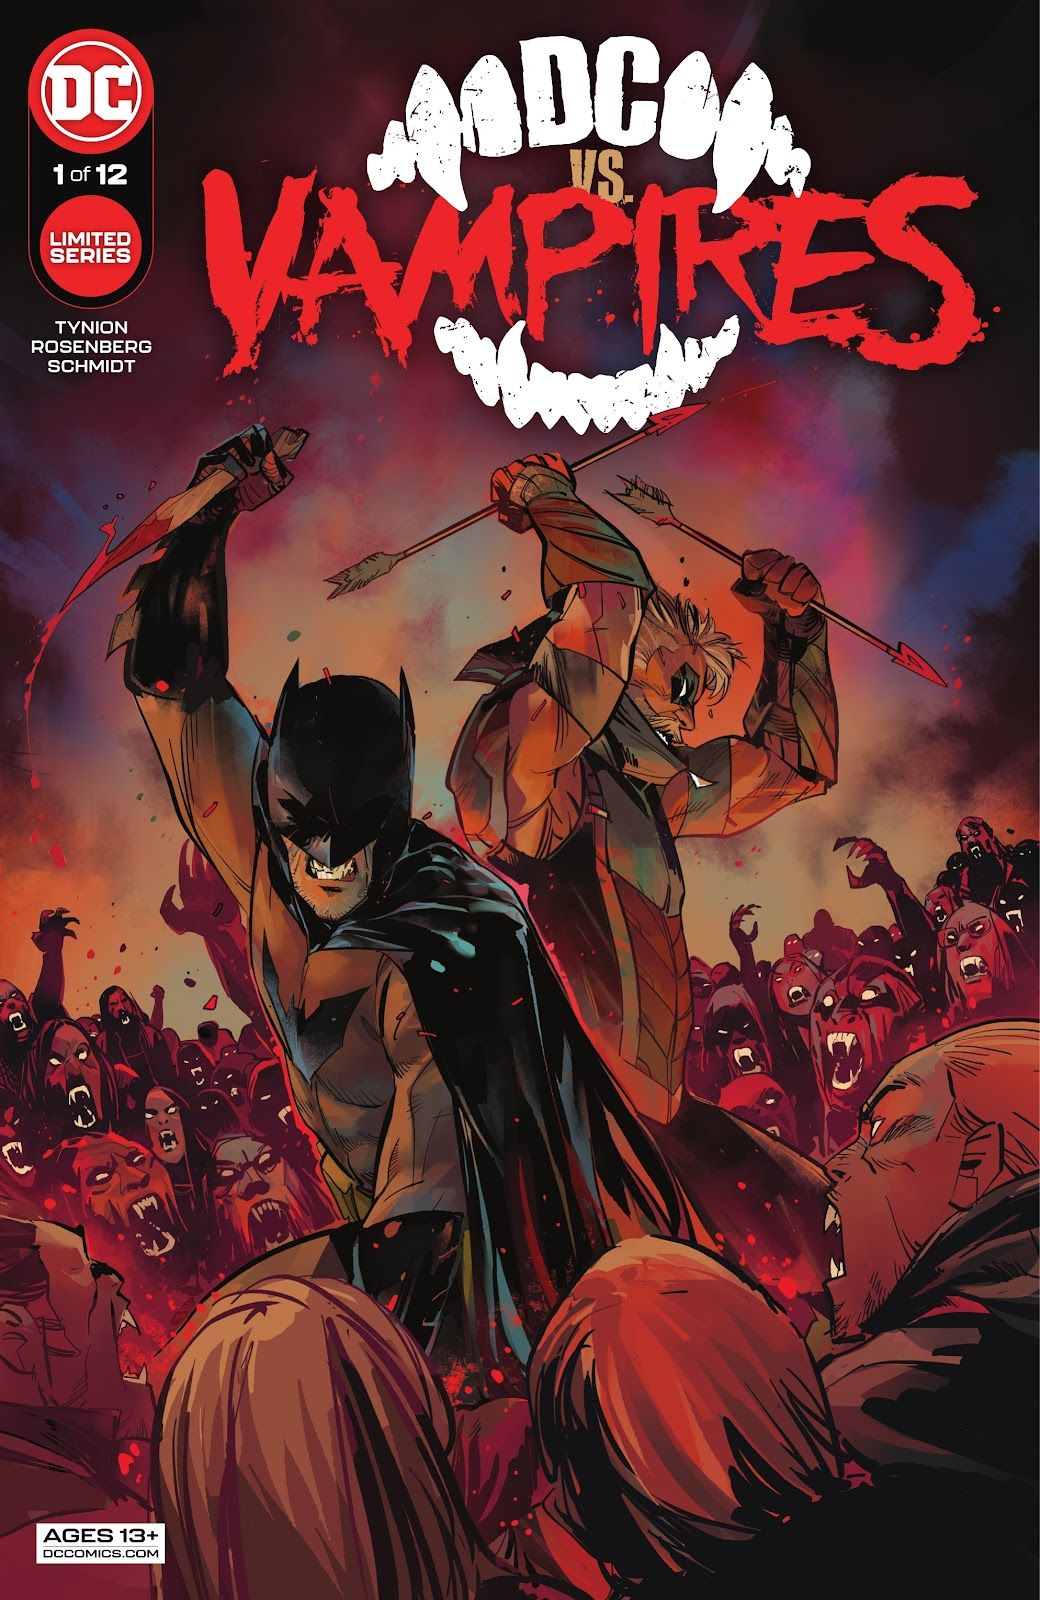 Reseña del cómic DC vs. Vampiros nº 1